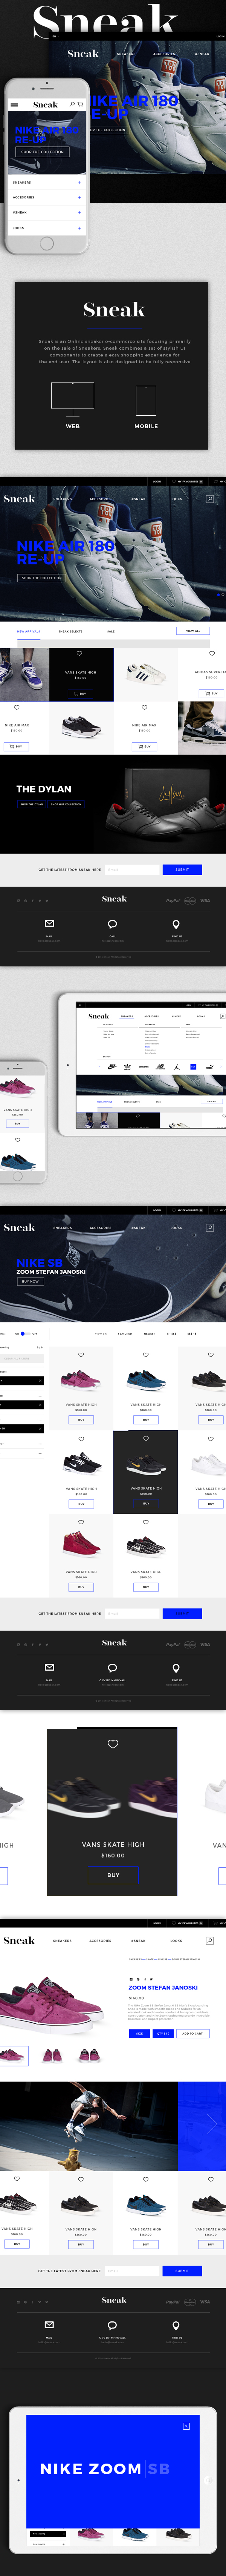 sneakers Nike adidas puma e-commerce online store UI ux